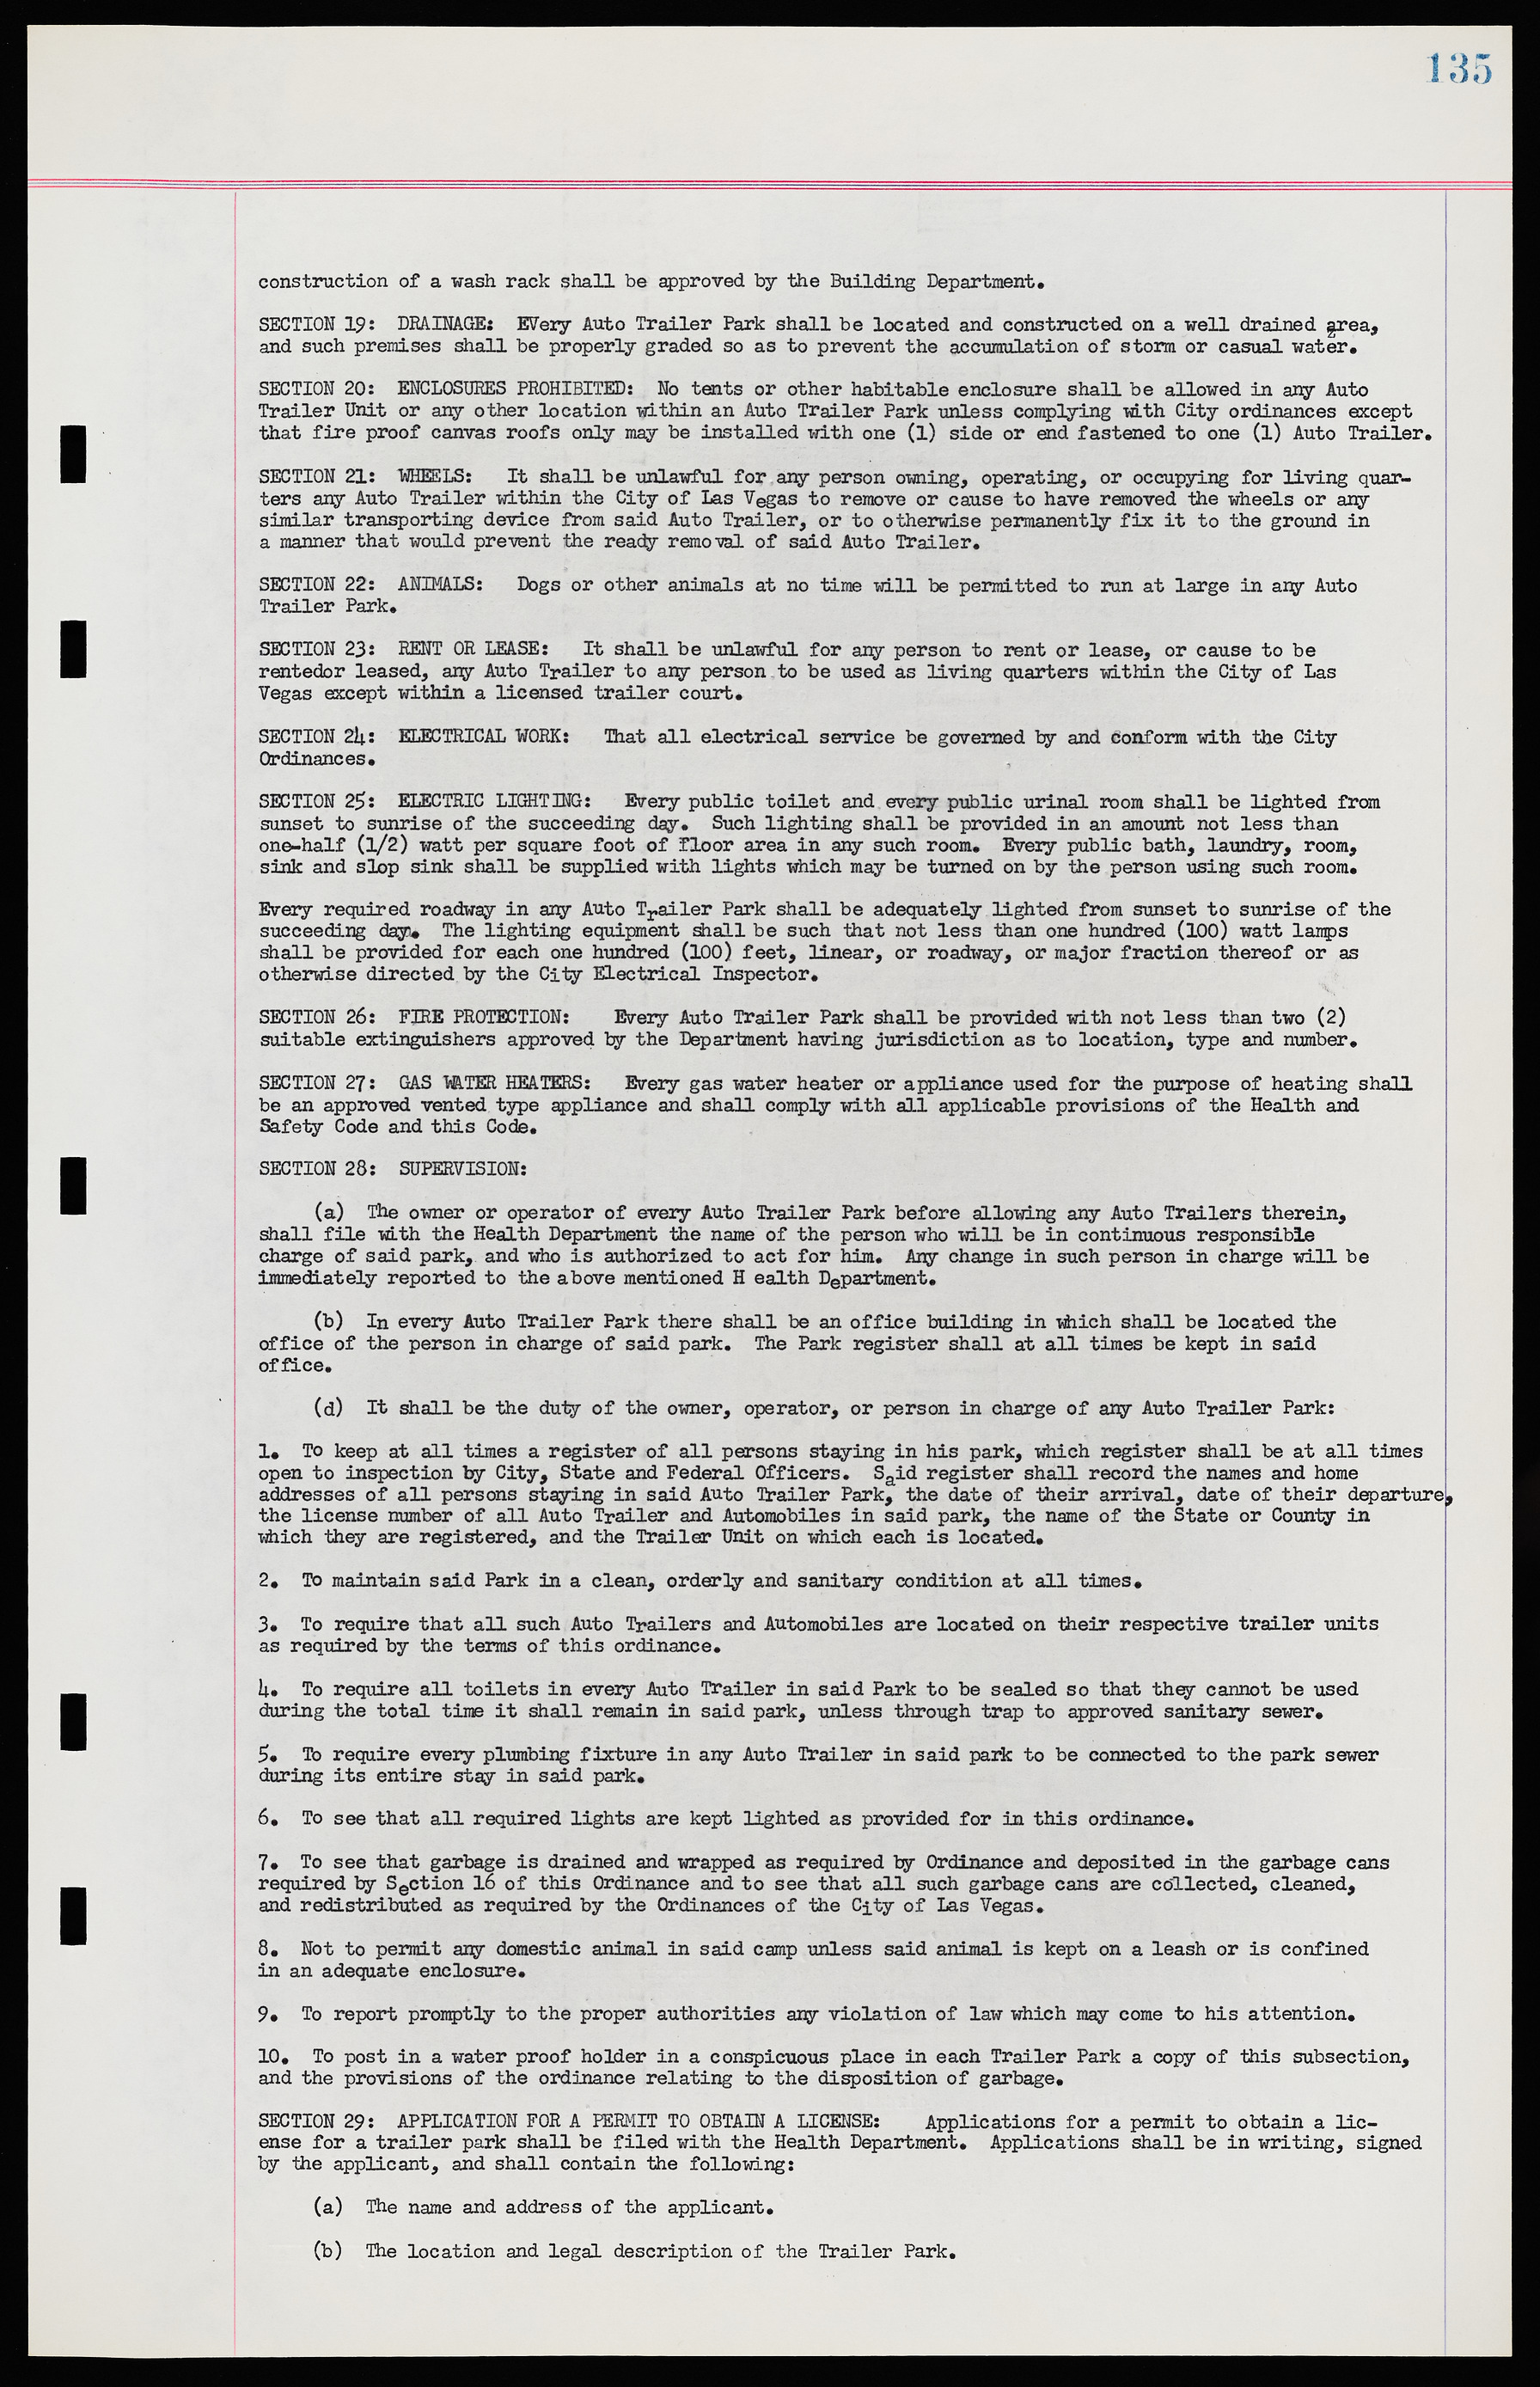 Las Vegas City Ordinances, November 13, 1950 to August 6, 1958, lvc000015-143